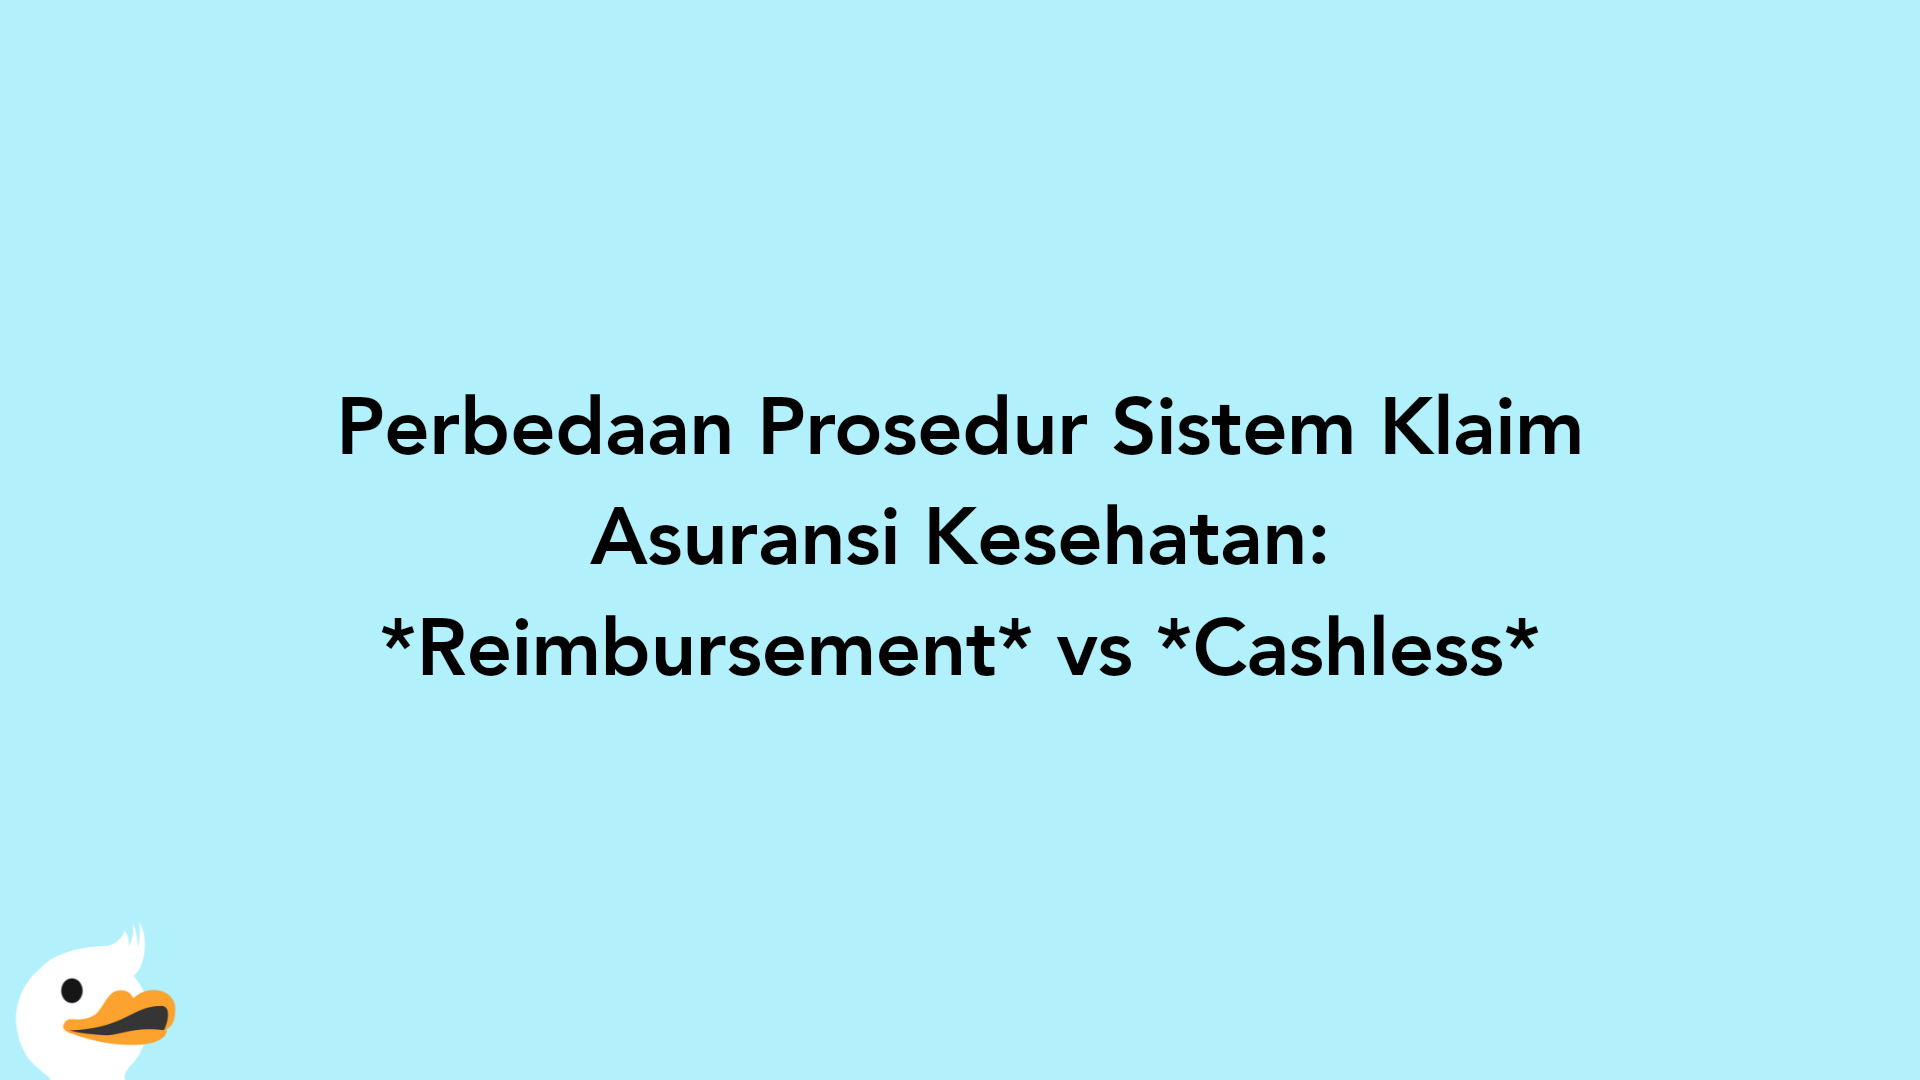 Perbedaan Prosedur Sistem Klaim Asuransi Kesehatan: Reimbursement vs Cashless